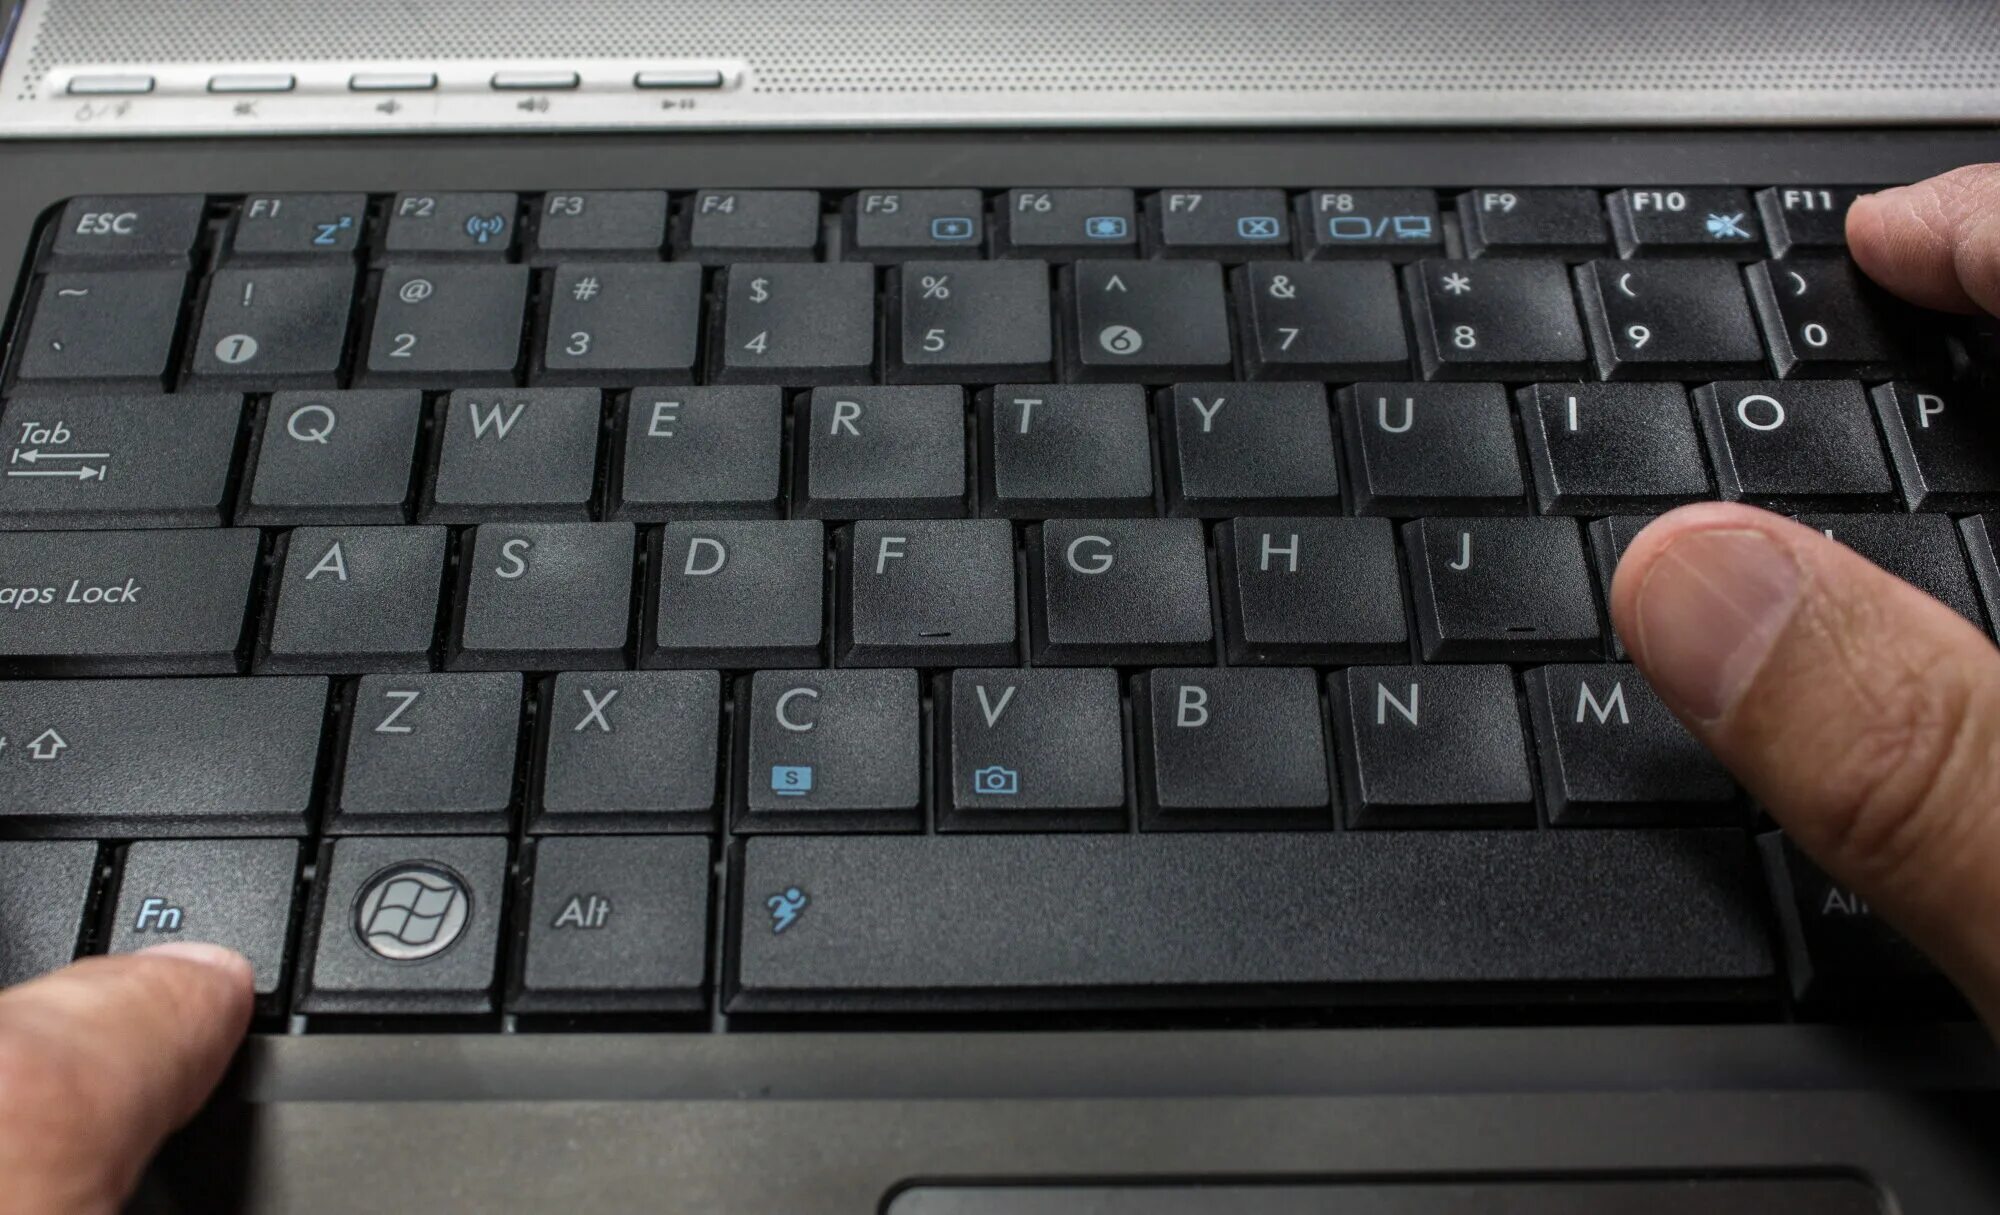 FN+Numlock на ноутбуке. Клавиша Numlock на ноутбуке. Клавиша Numlock на клавиатуре. Как можно включить ноутбук